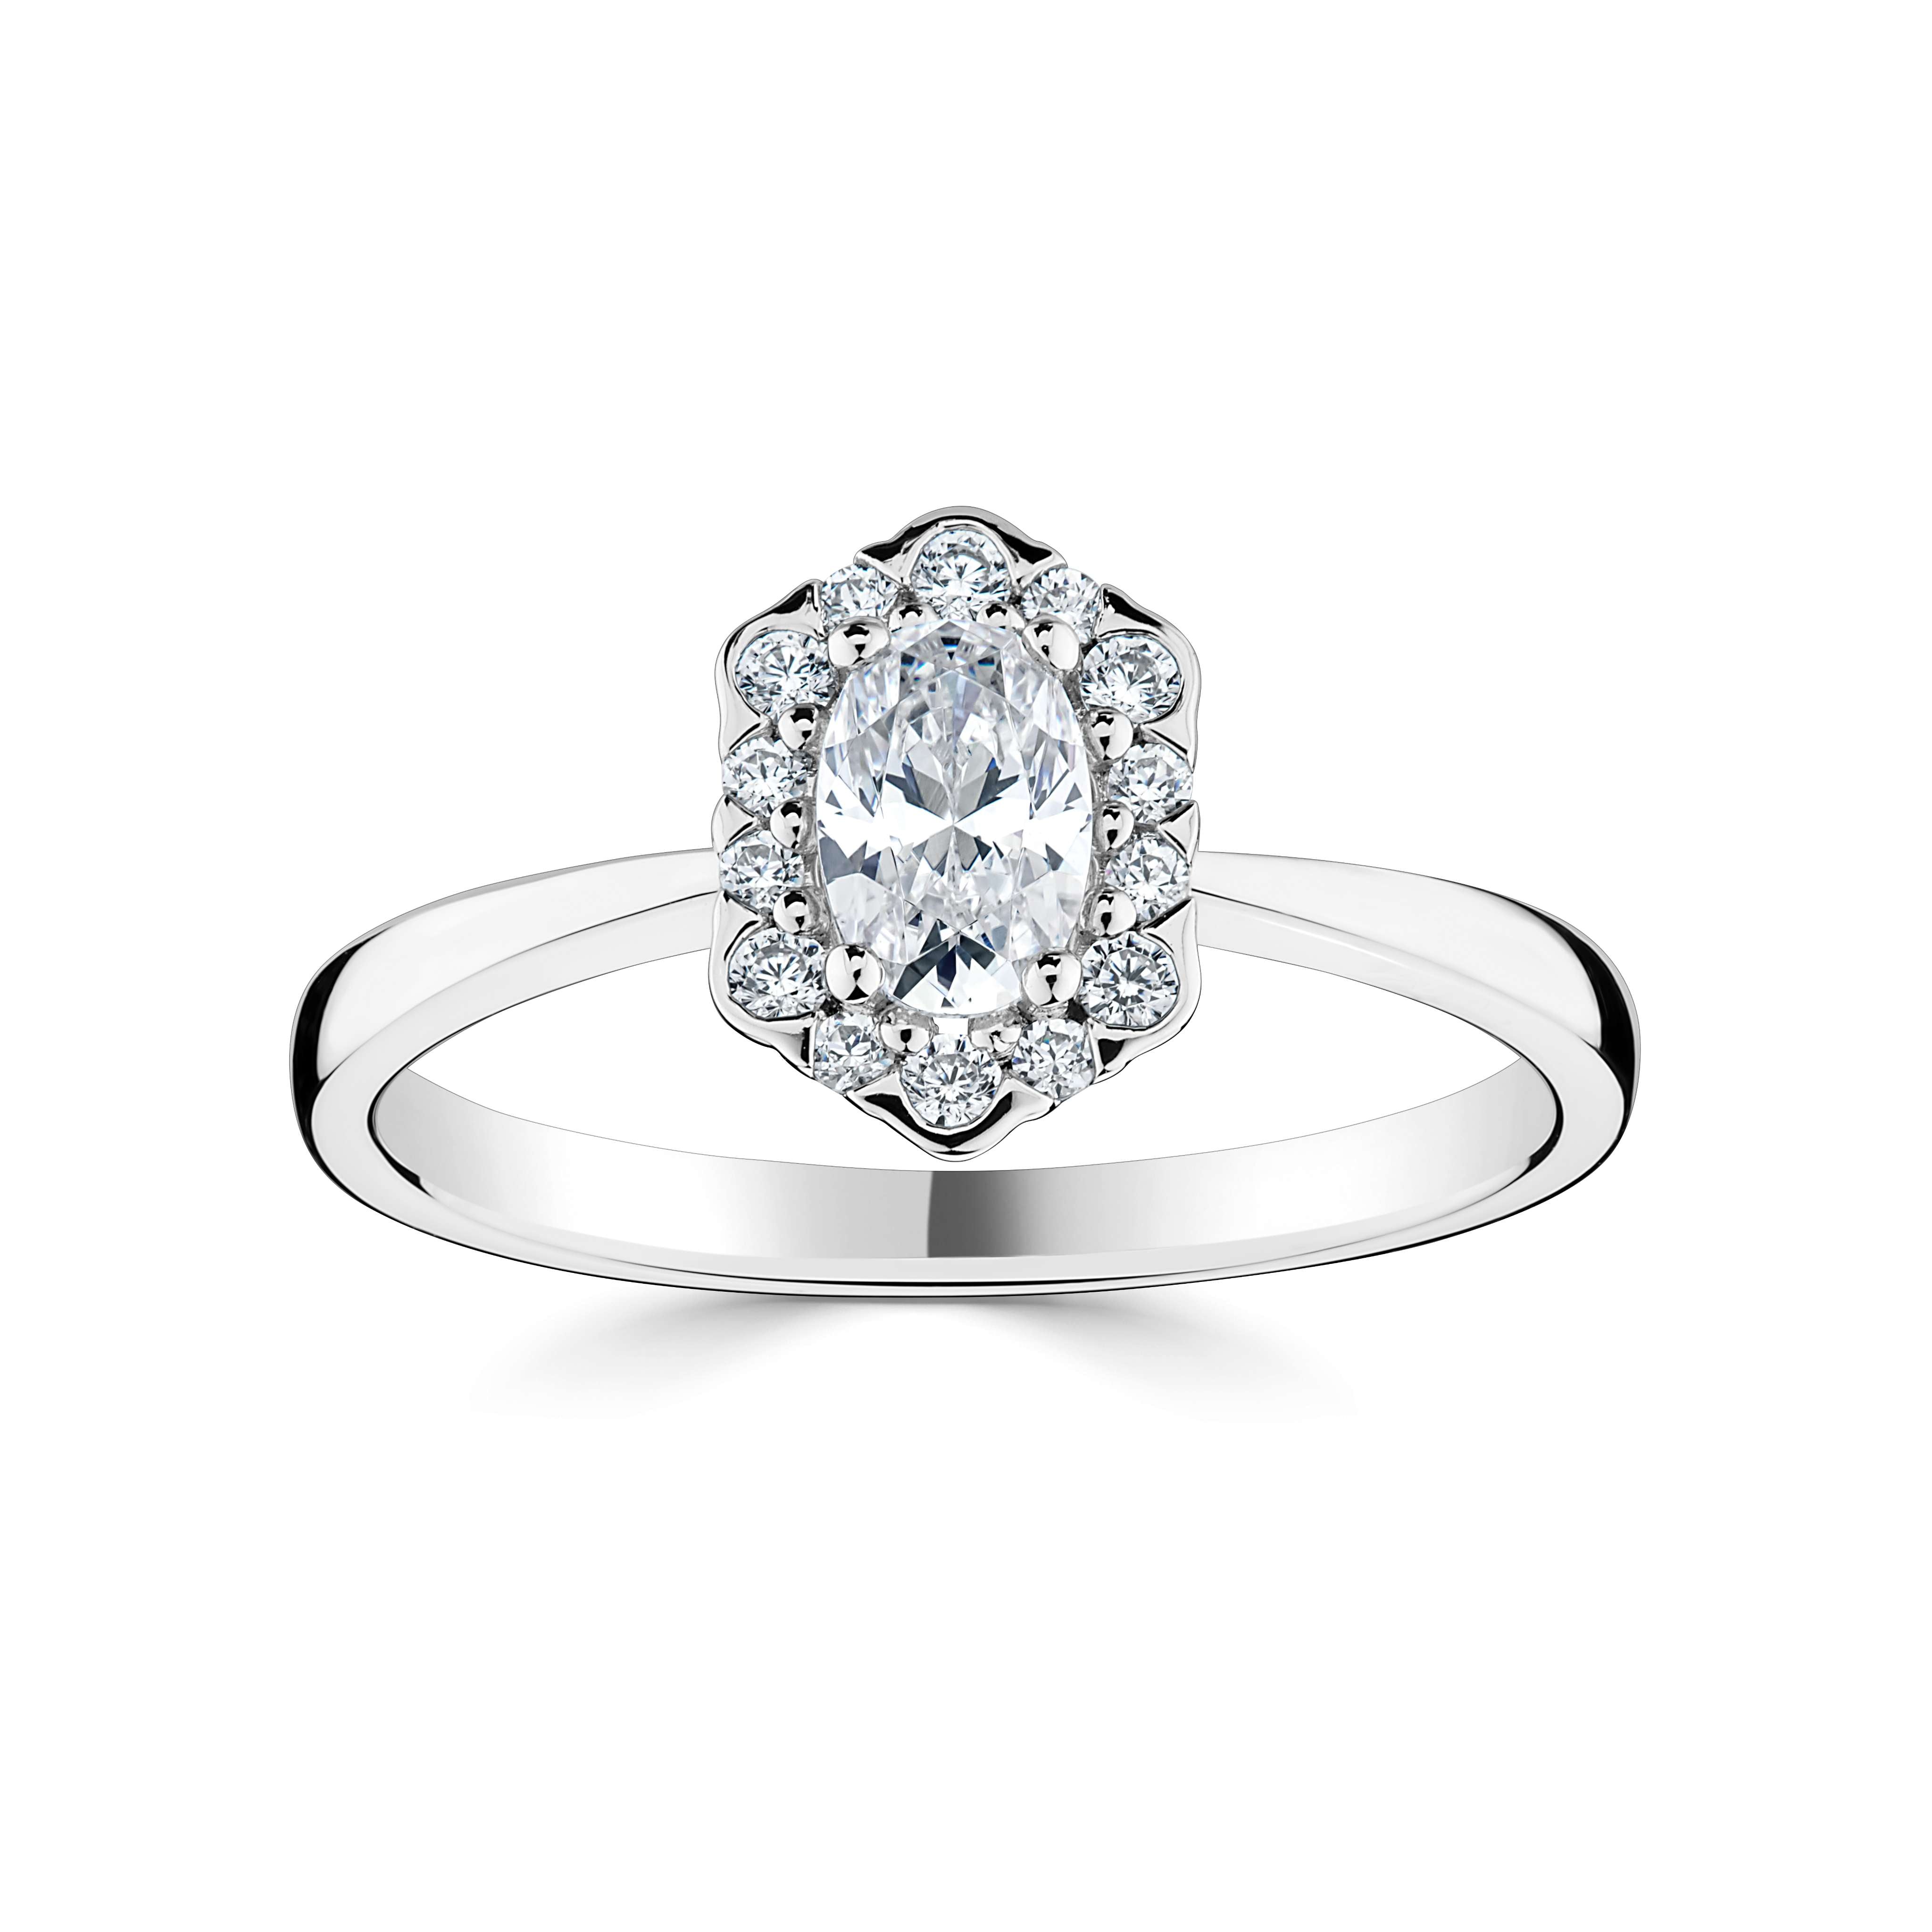 Adrianna *Select an Oval Diamond 0.50ct or above